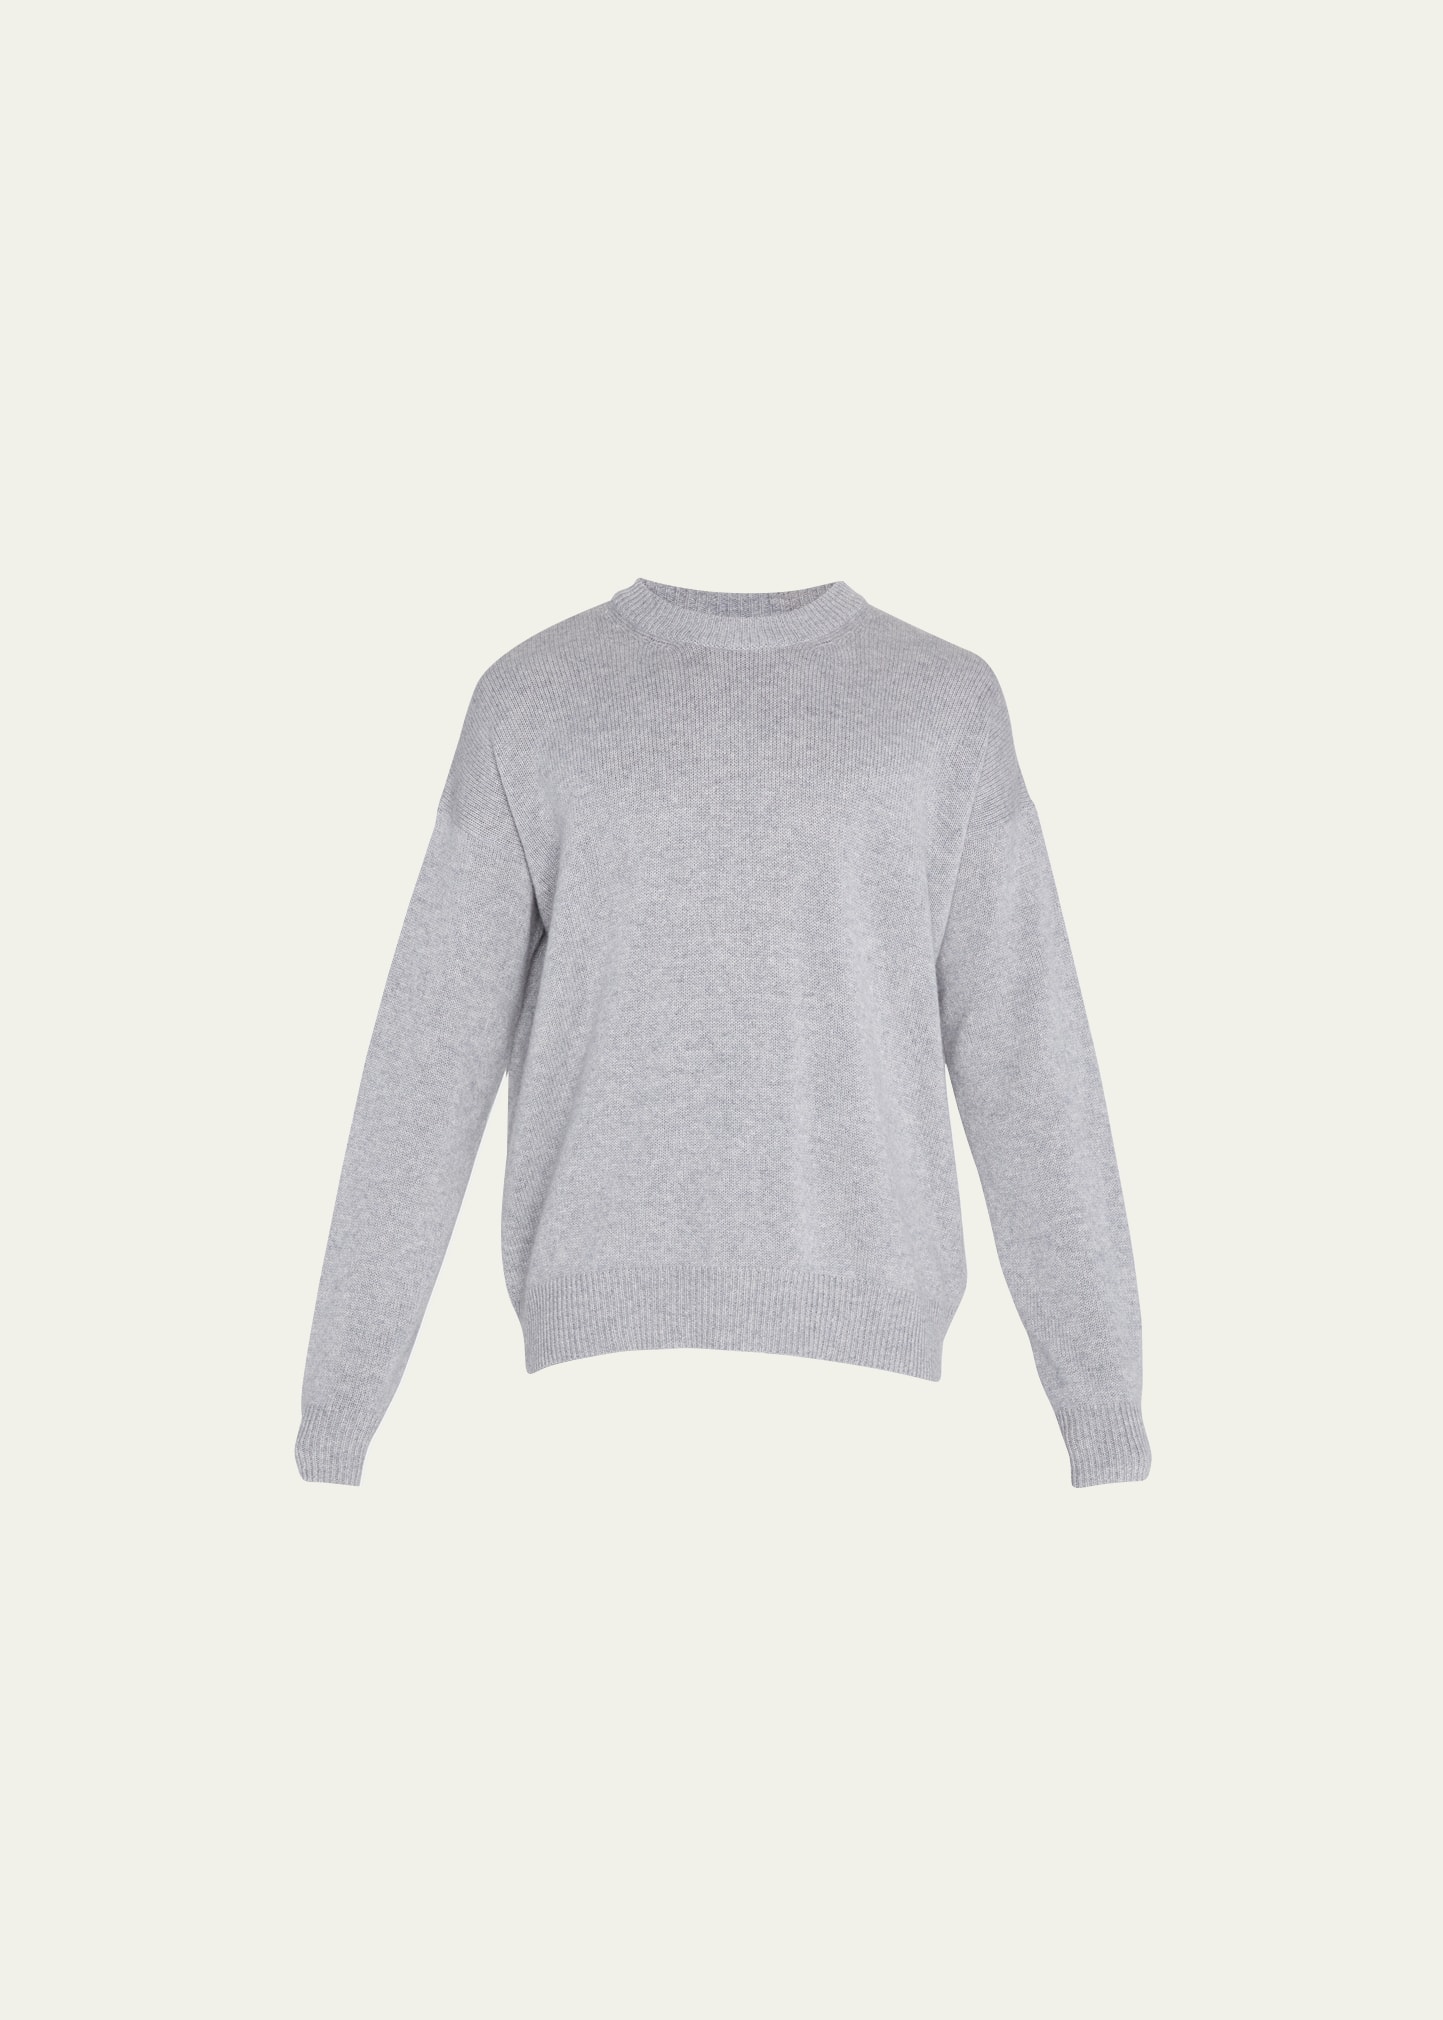 Jil Sander Men's Basic Cashmere Sweater In Light Grey Mel